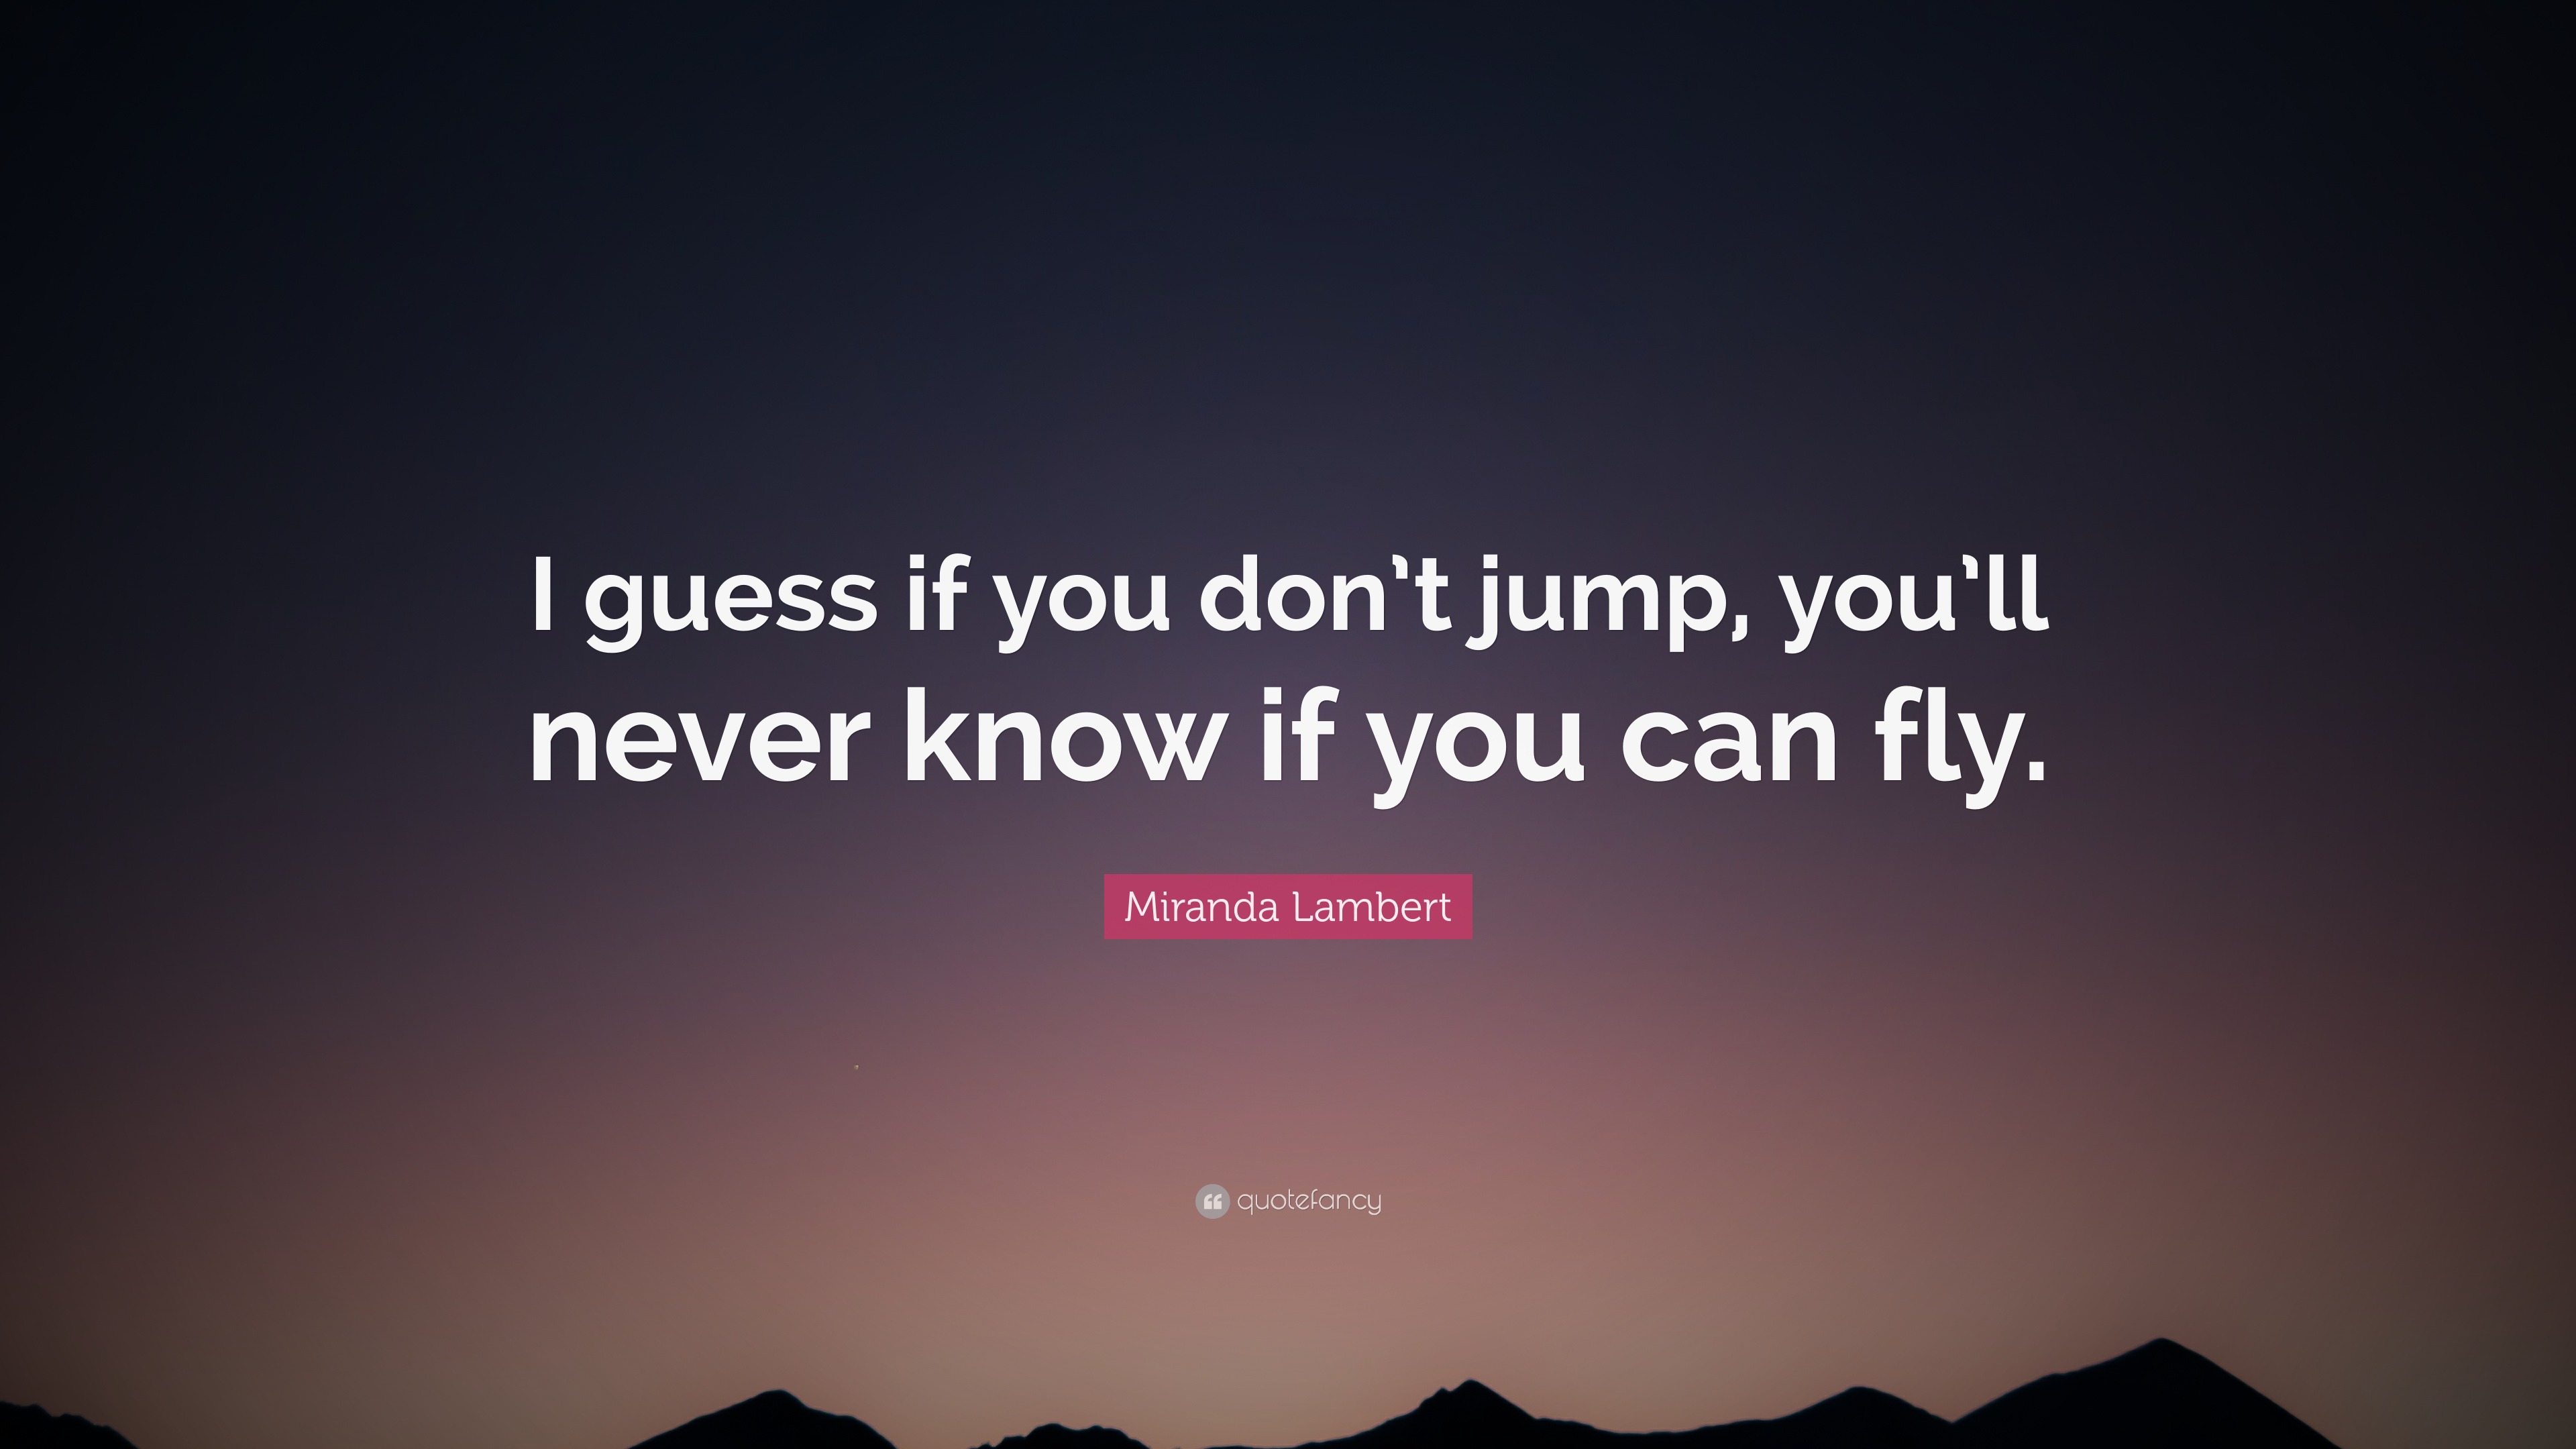 Miranda Lambert Quote: guess if don't you'll never if you